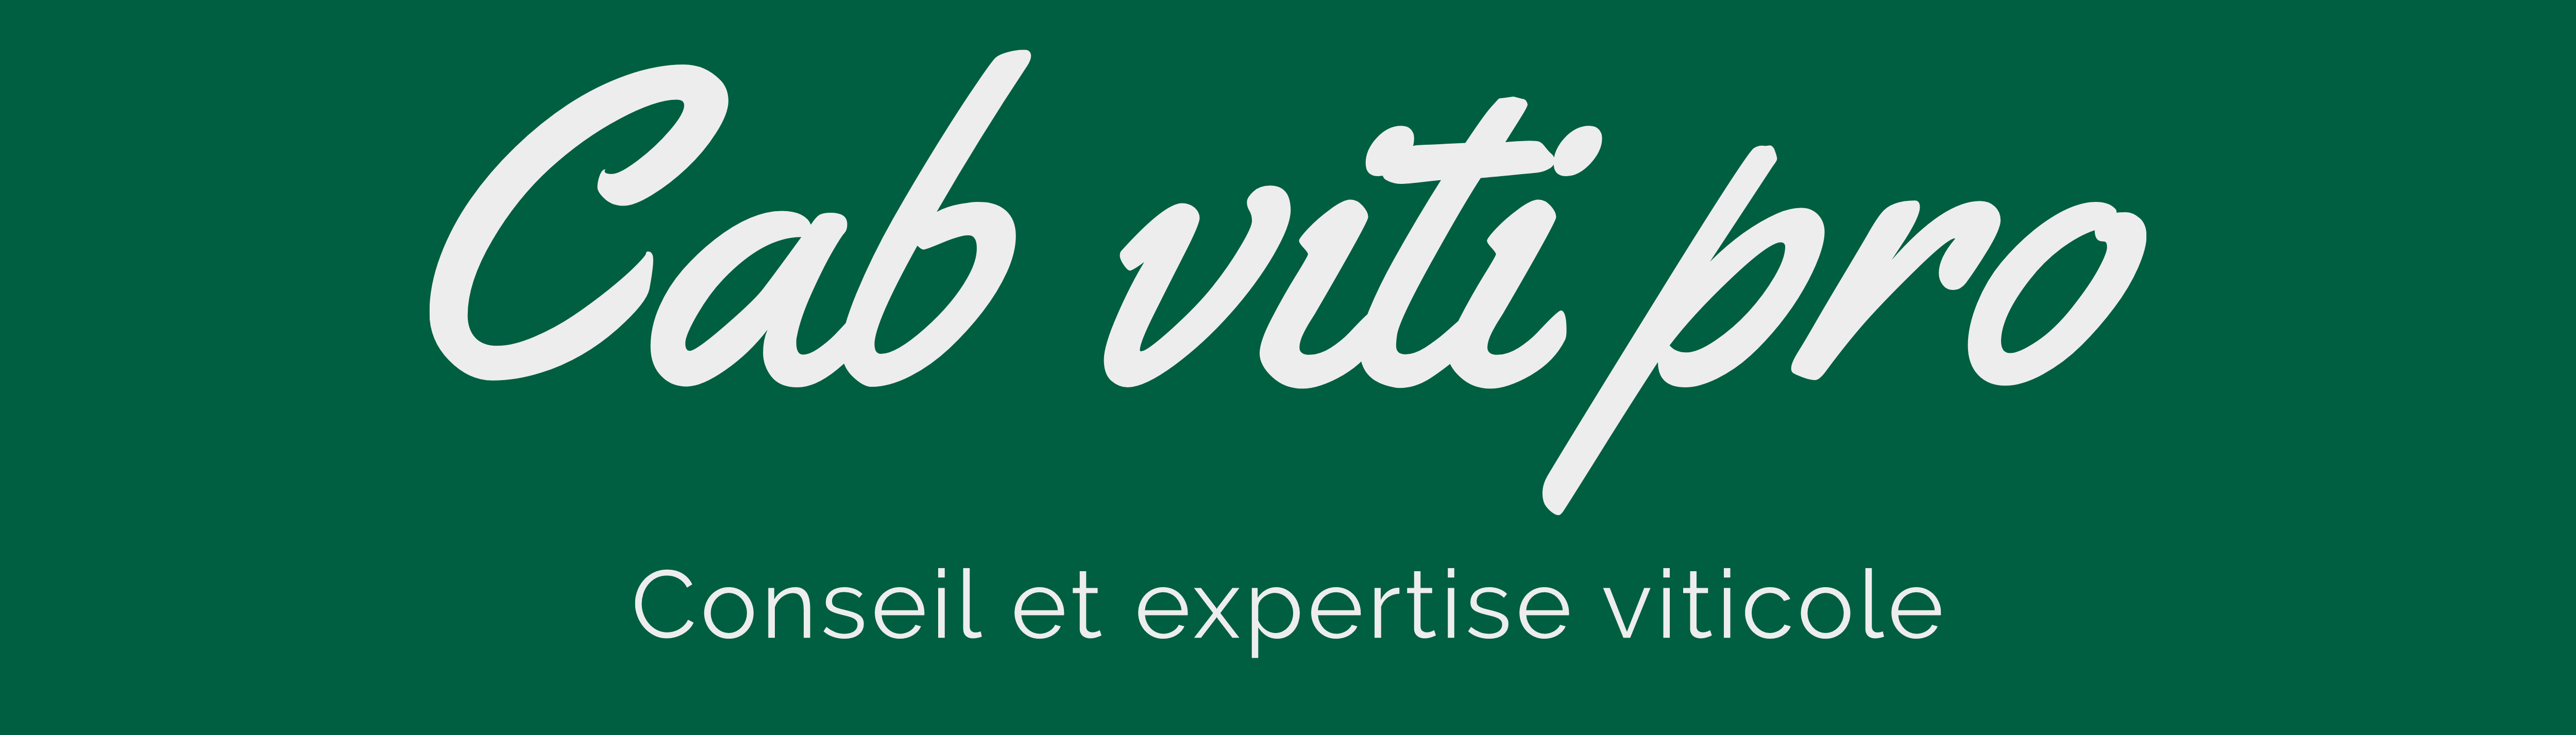 Cabvitipro.com – Cabinet Viticole Provence